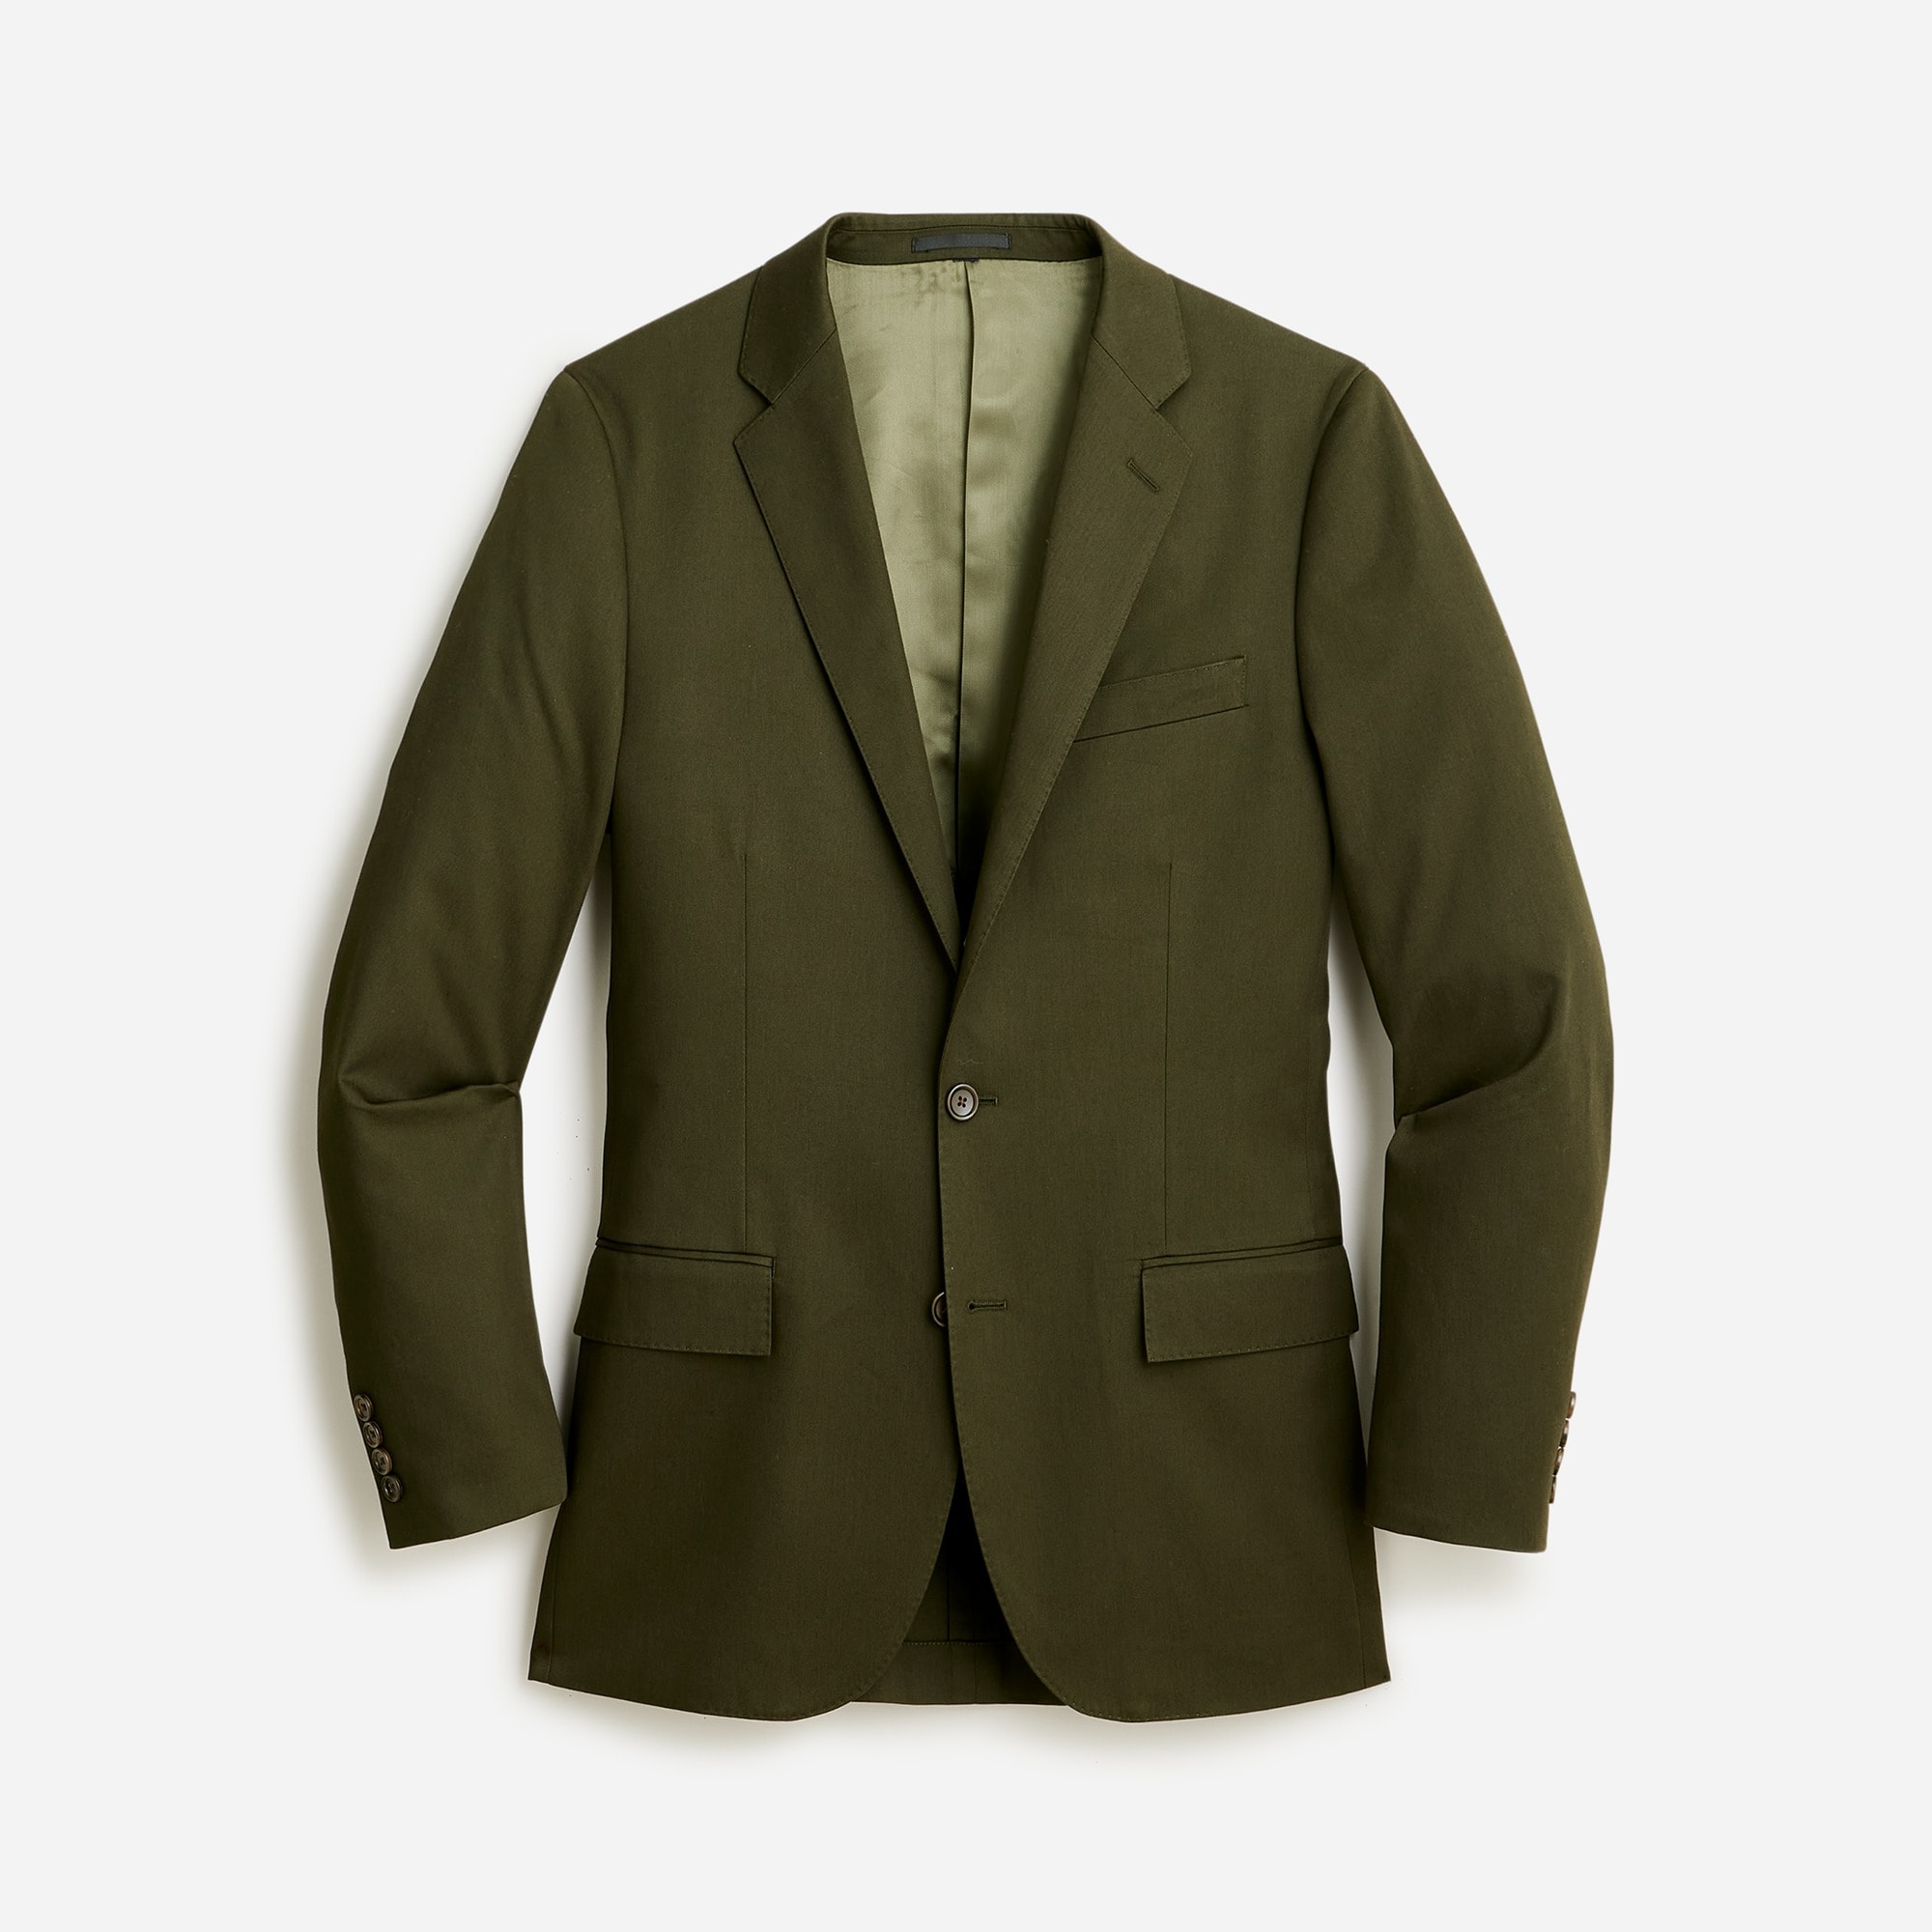 J.Crew: Ludlow Slim-fit Suit Jacket In Italian Chino For Men